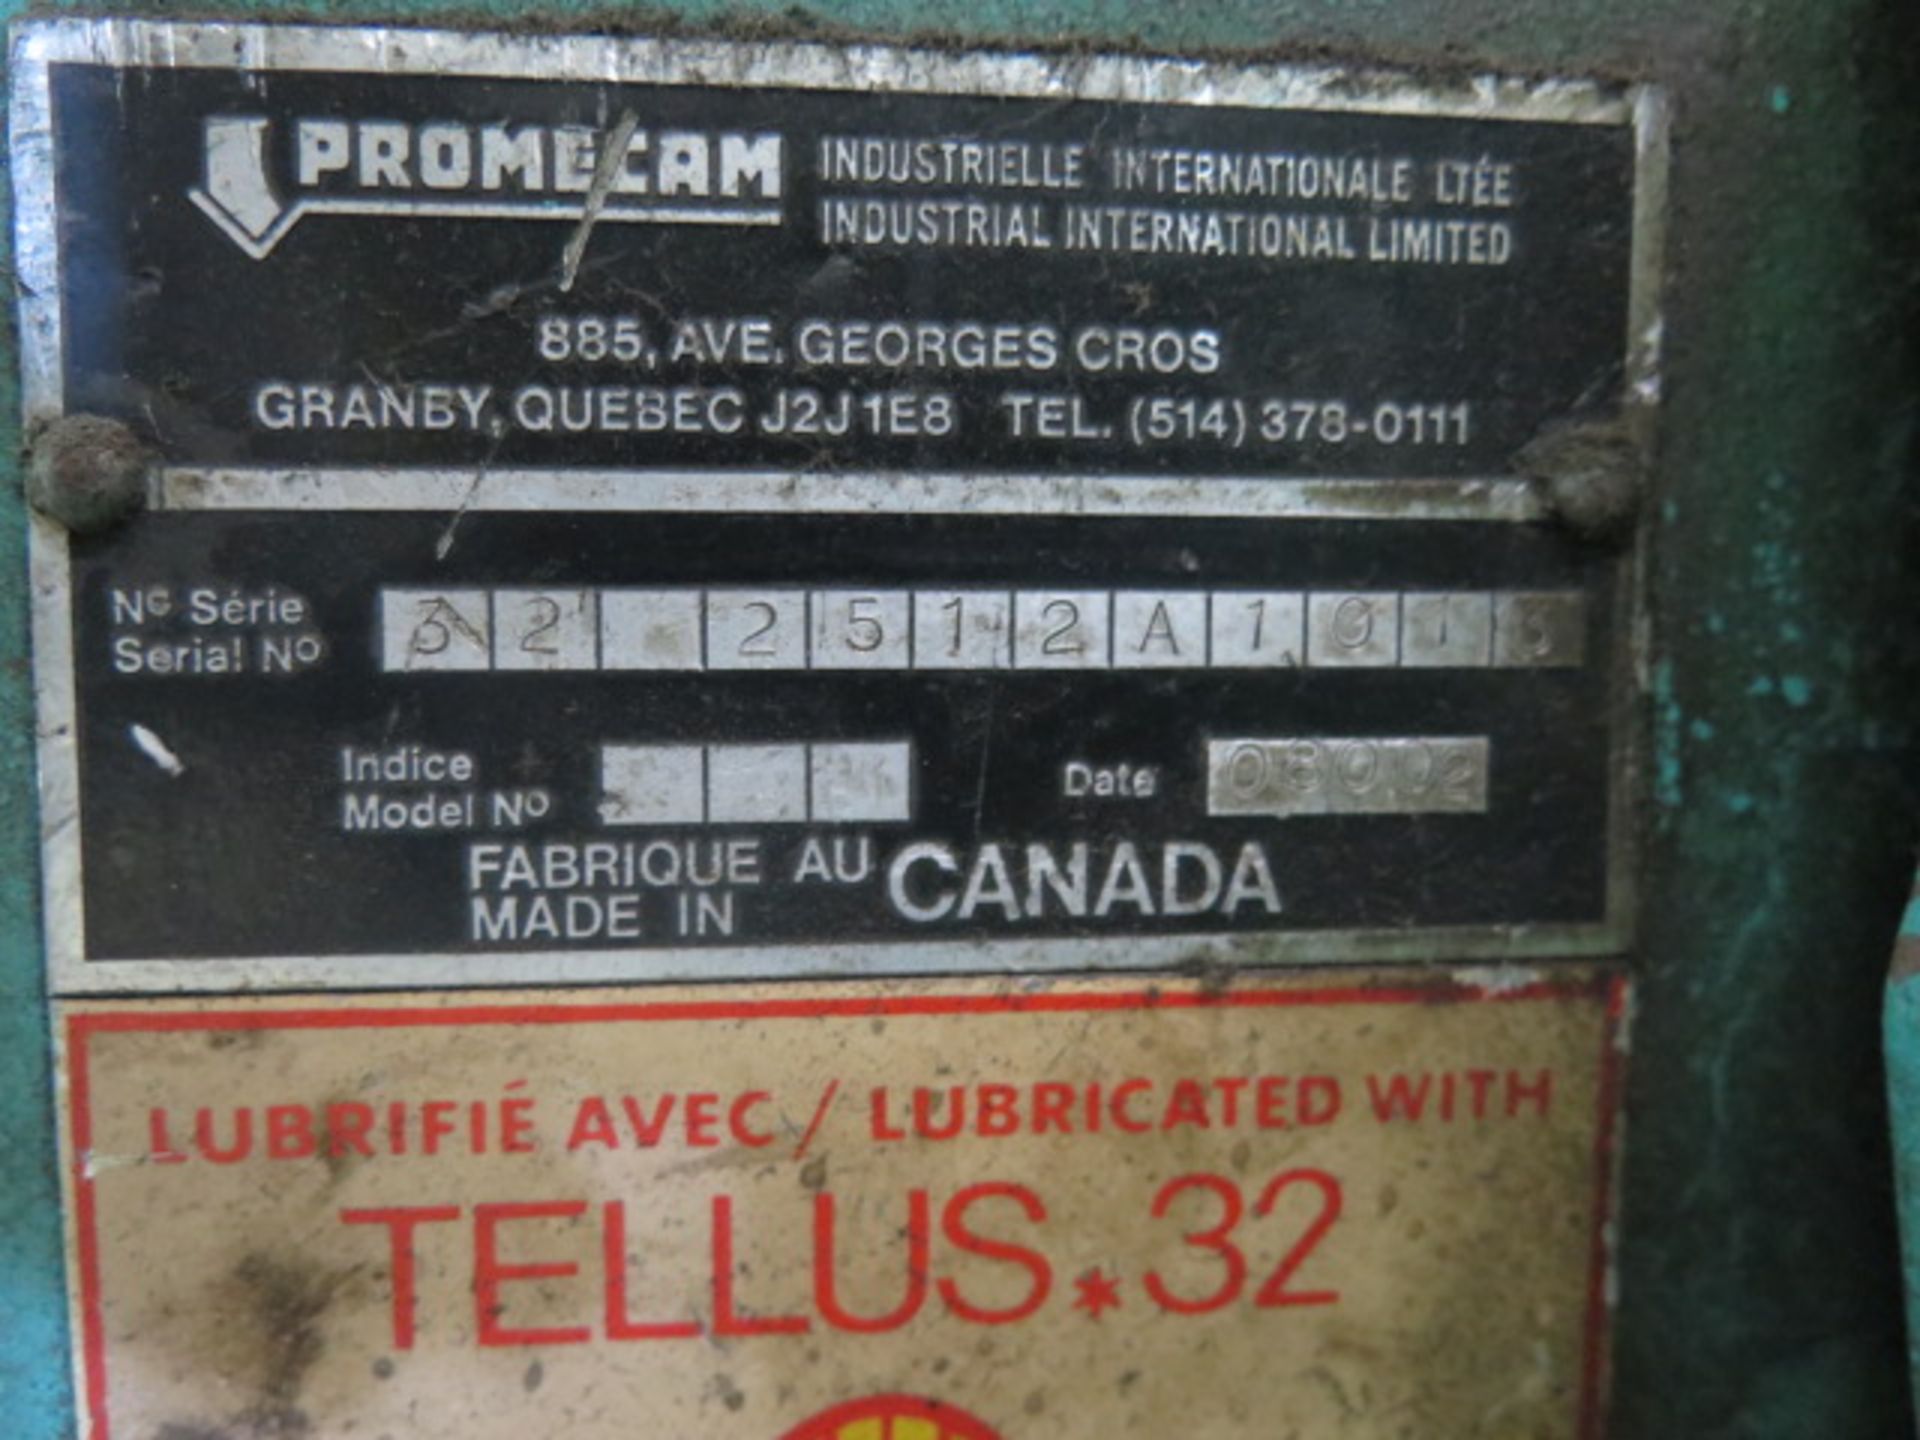 Promecam RG-25-12 25-Ton x 48” Press Brake s/n 32-2512A1013 w/ Autogauge G24 Powergauge, SOLD AS IS - Image 12 of 12